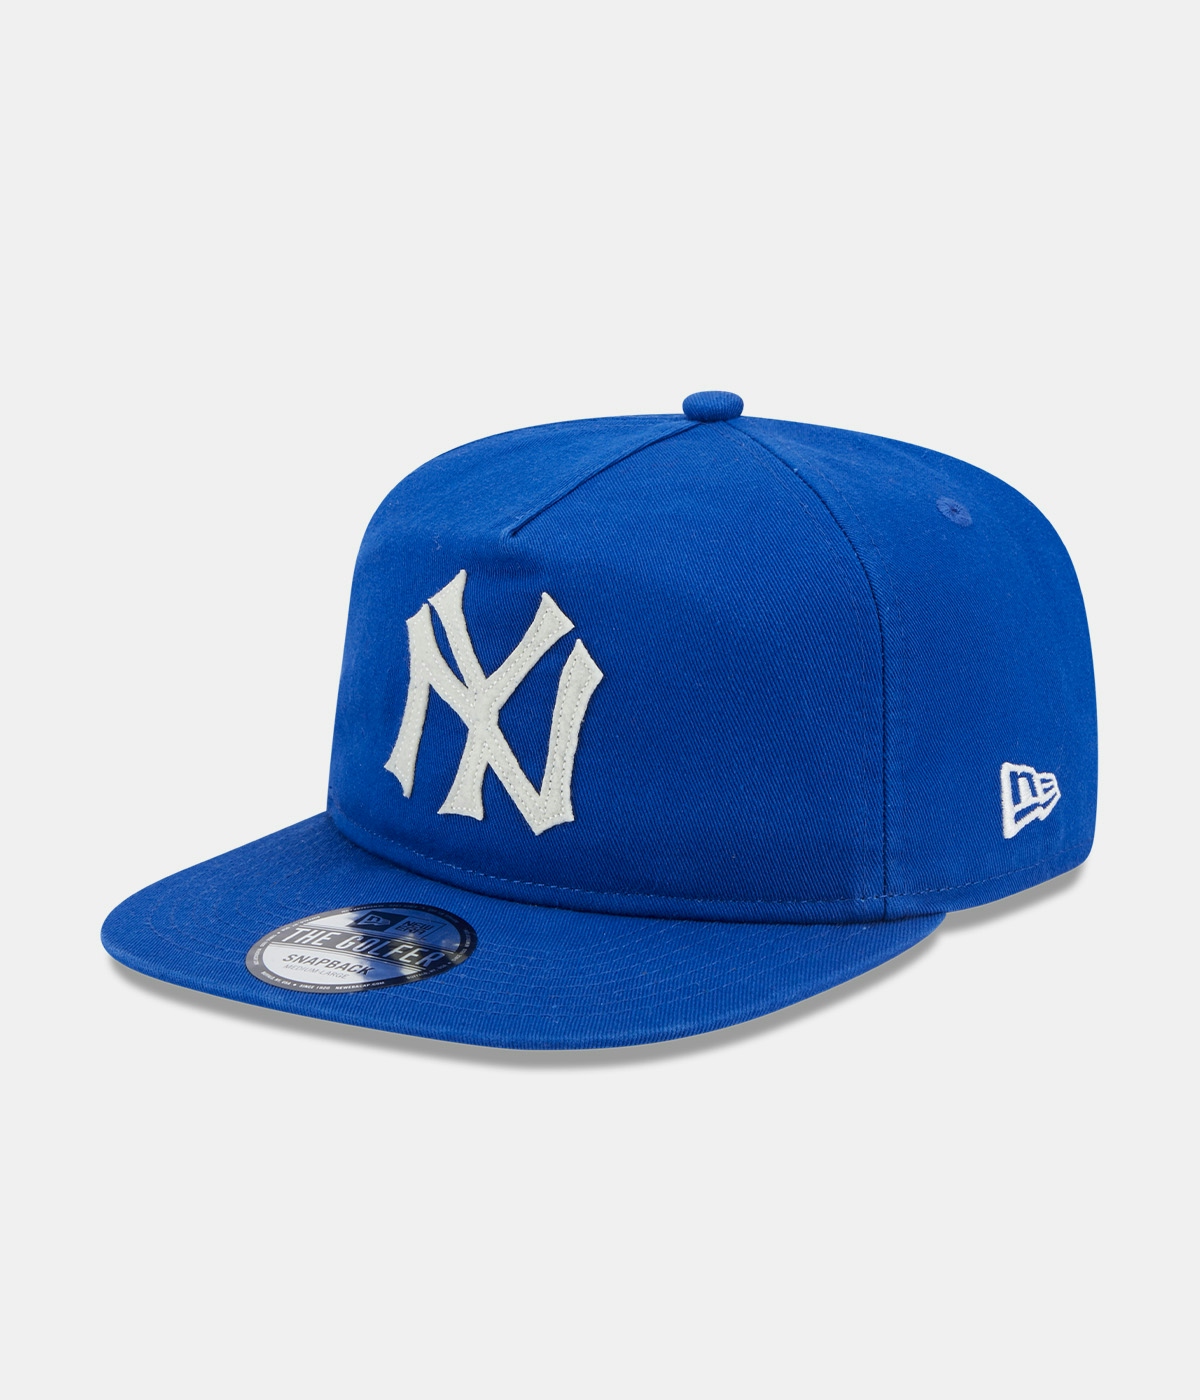 New Era Mlb World Series Golfer New York Yankees Cap Blue 1